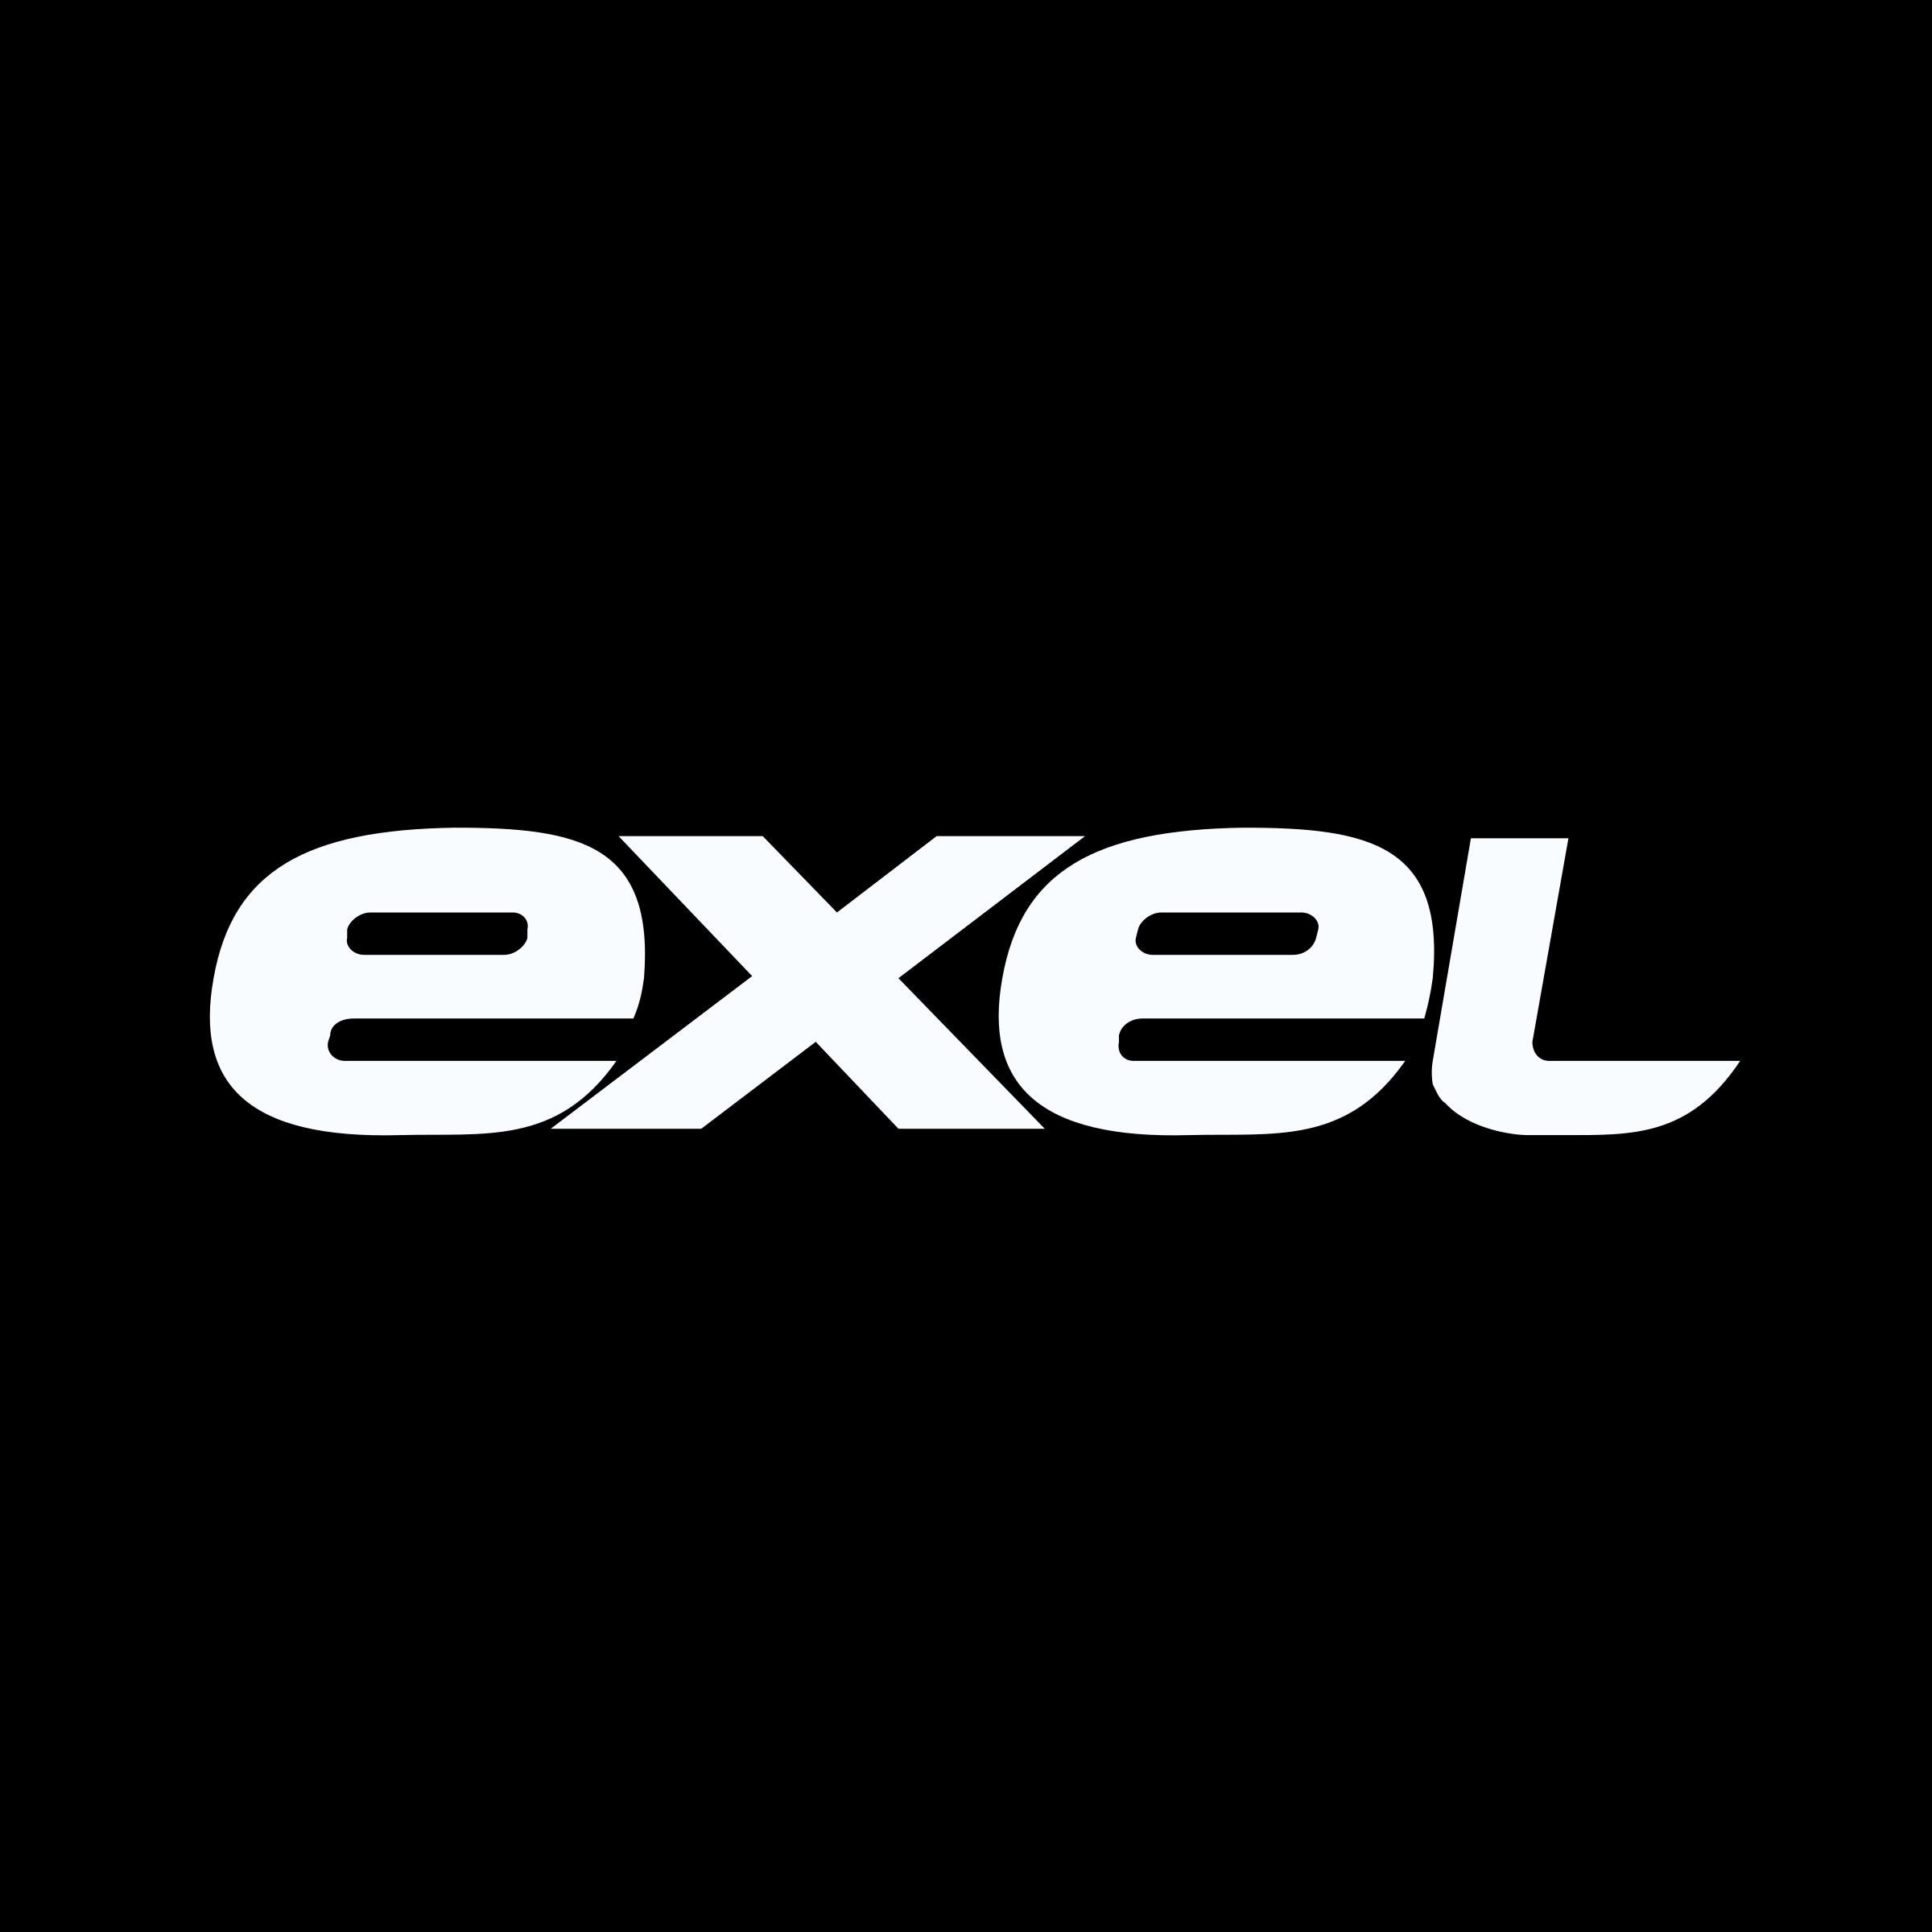 Exel Logo - Exel Logo PNG Transparent & SVG Vector - Freebie Supply